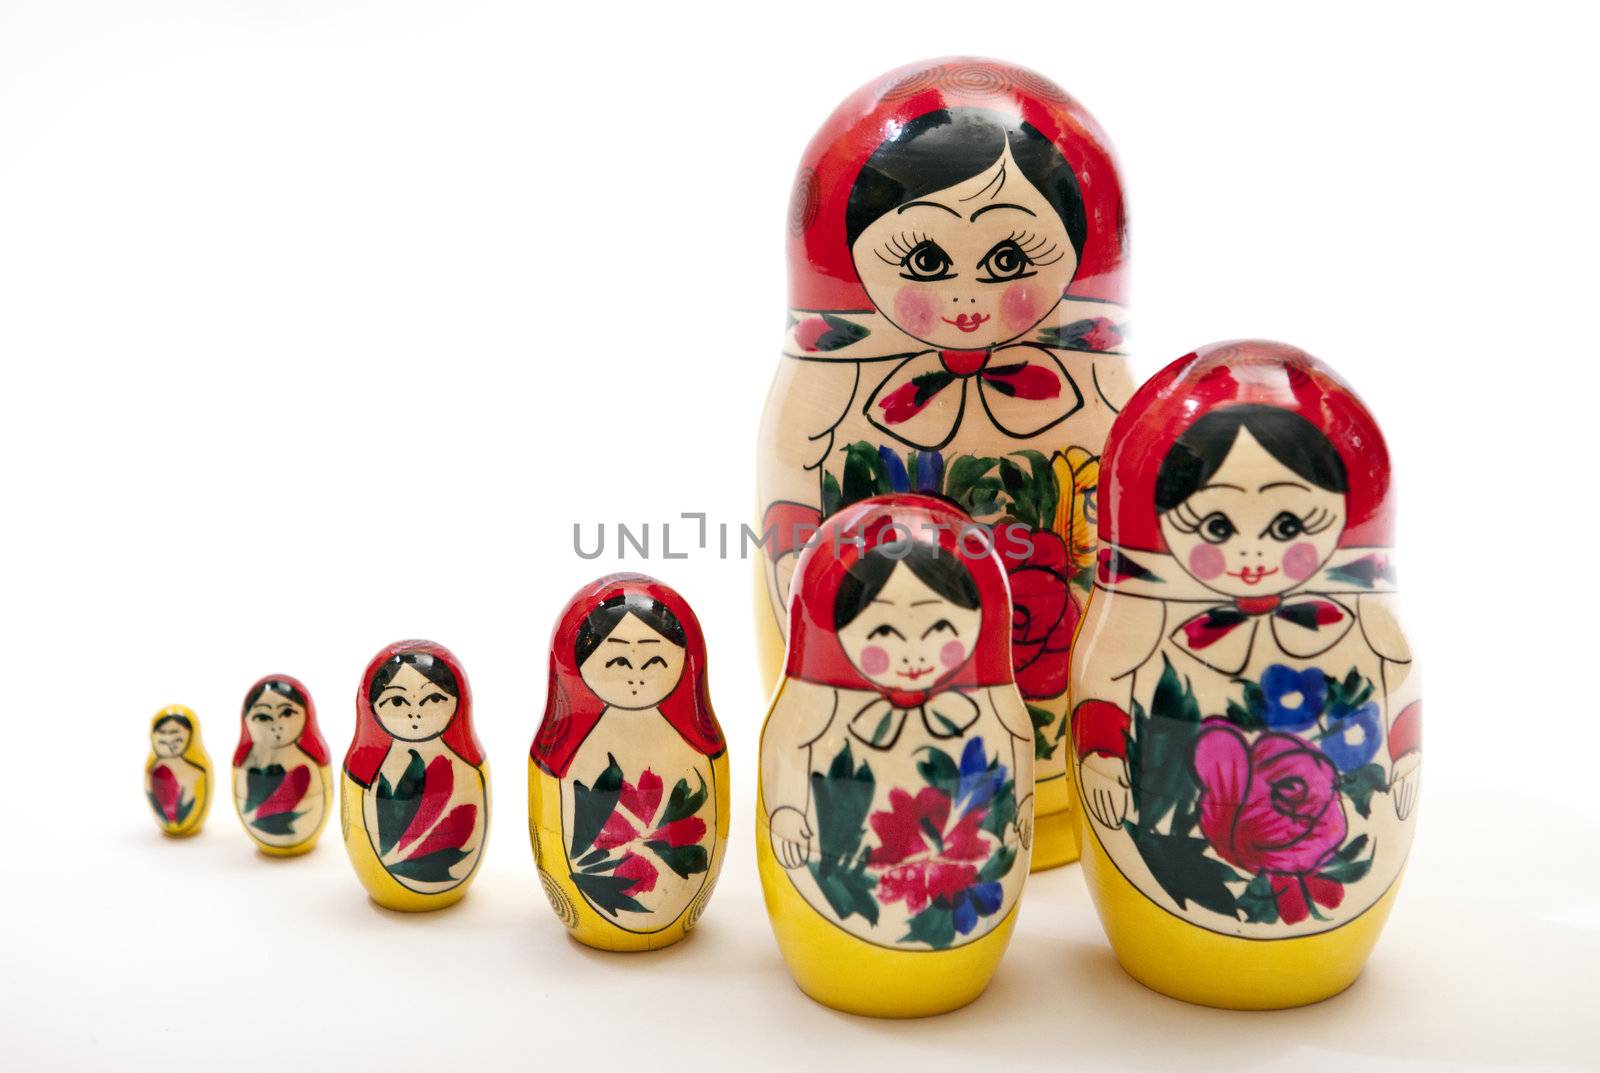 Russian Dolls by chrisdorney